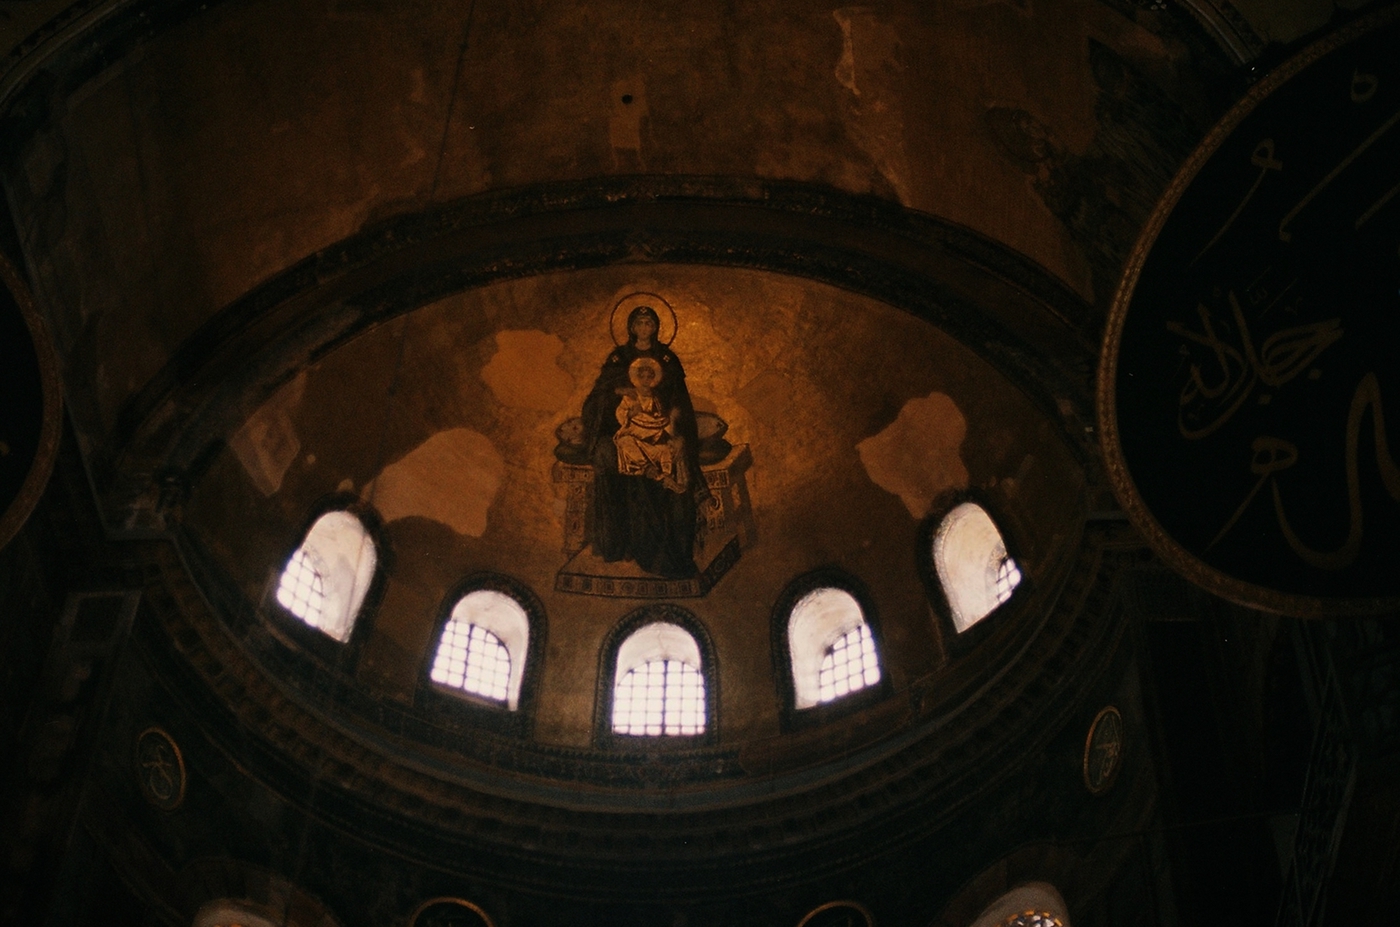 istanbul canon AE1 fujifilm tudor film 35mm Hagia Sophia khora film photography analogue photography Lomography